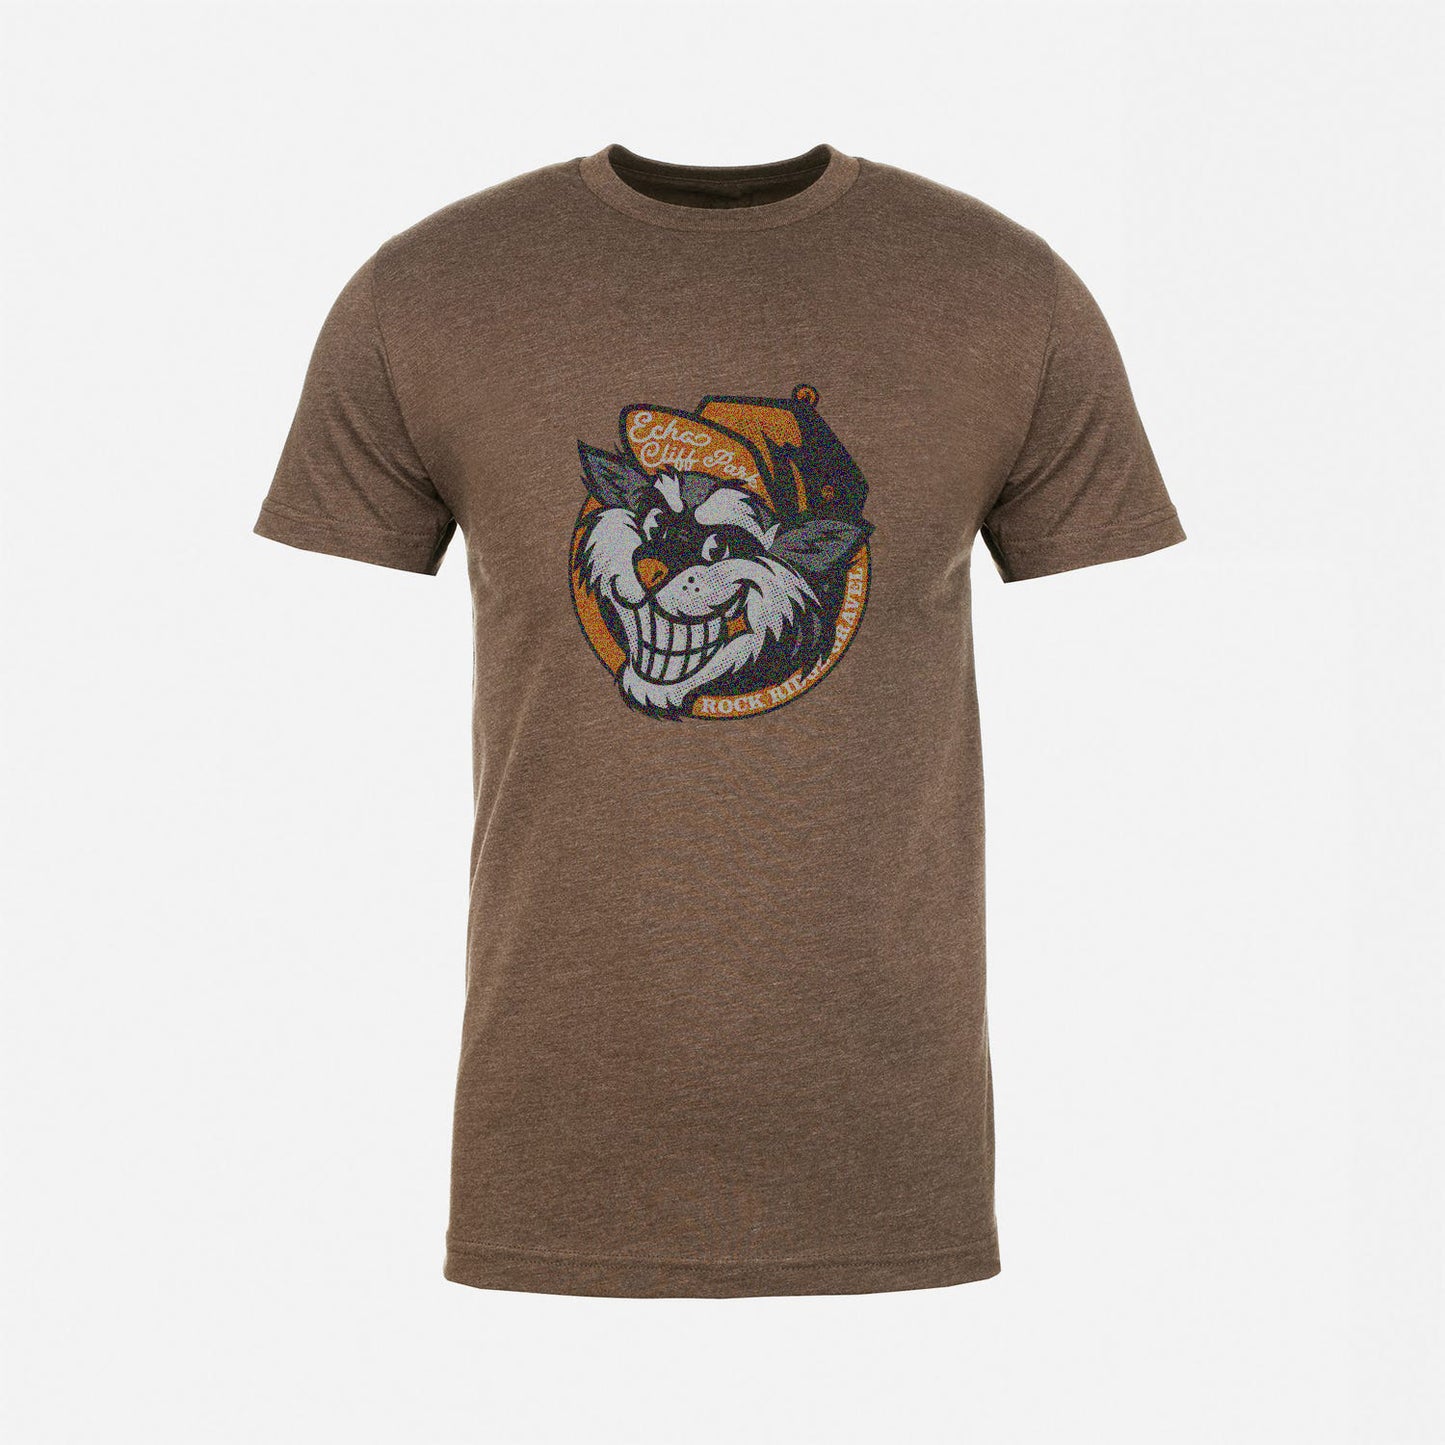 Roger the Raccoon T-Shirt